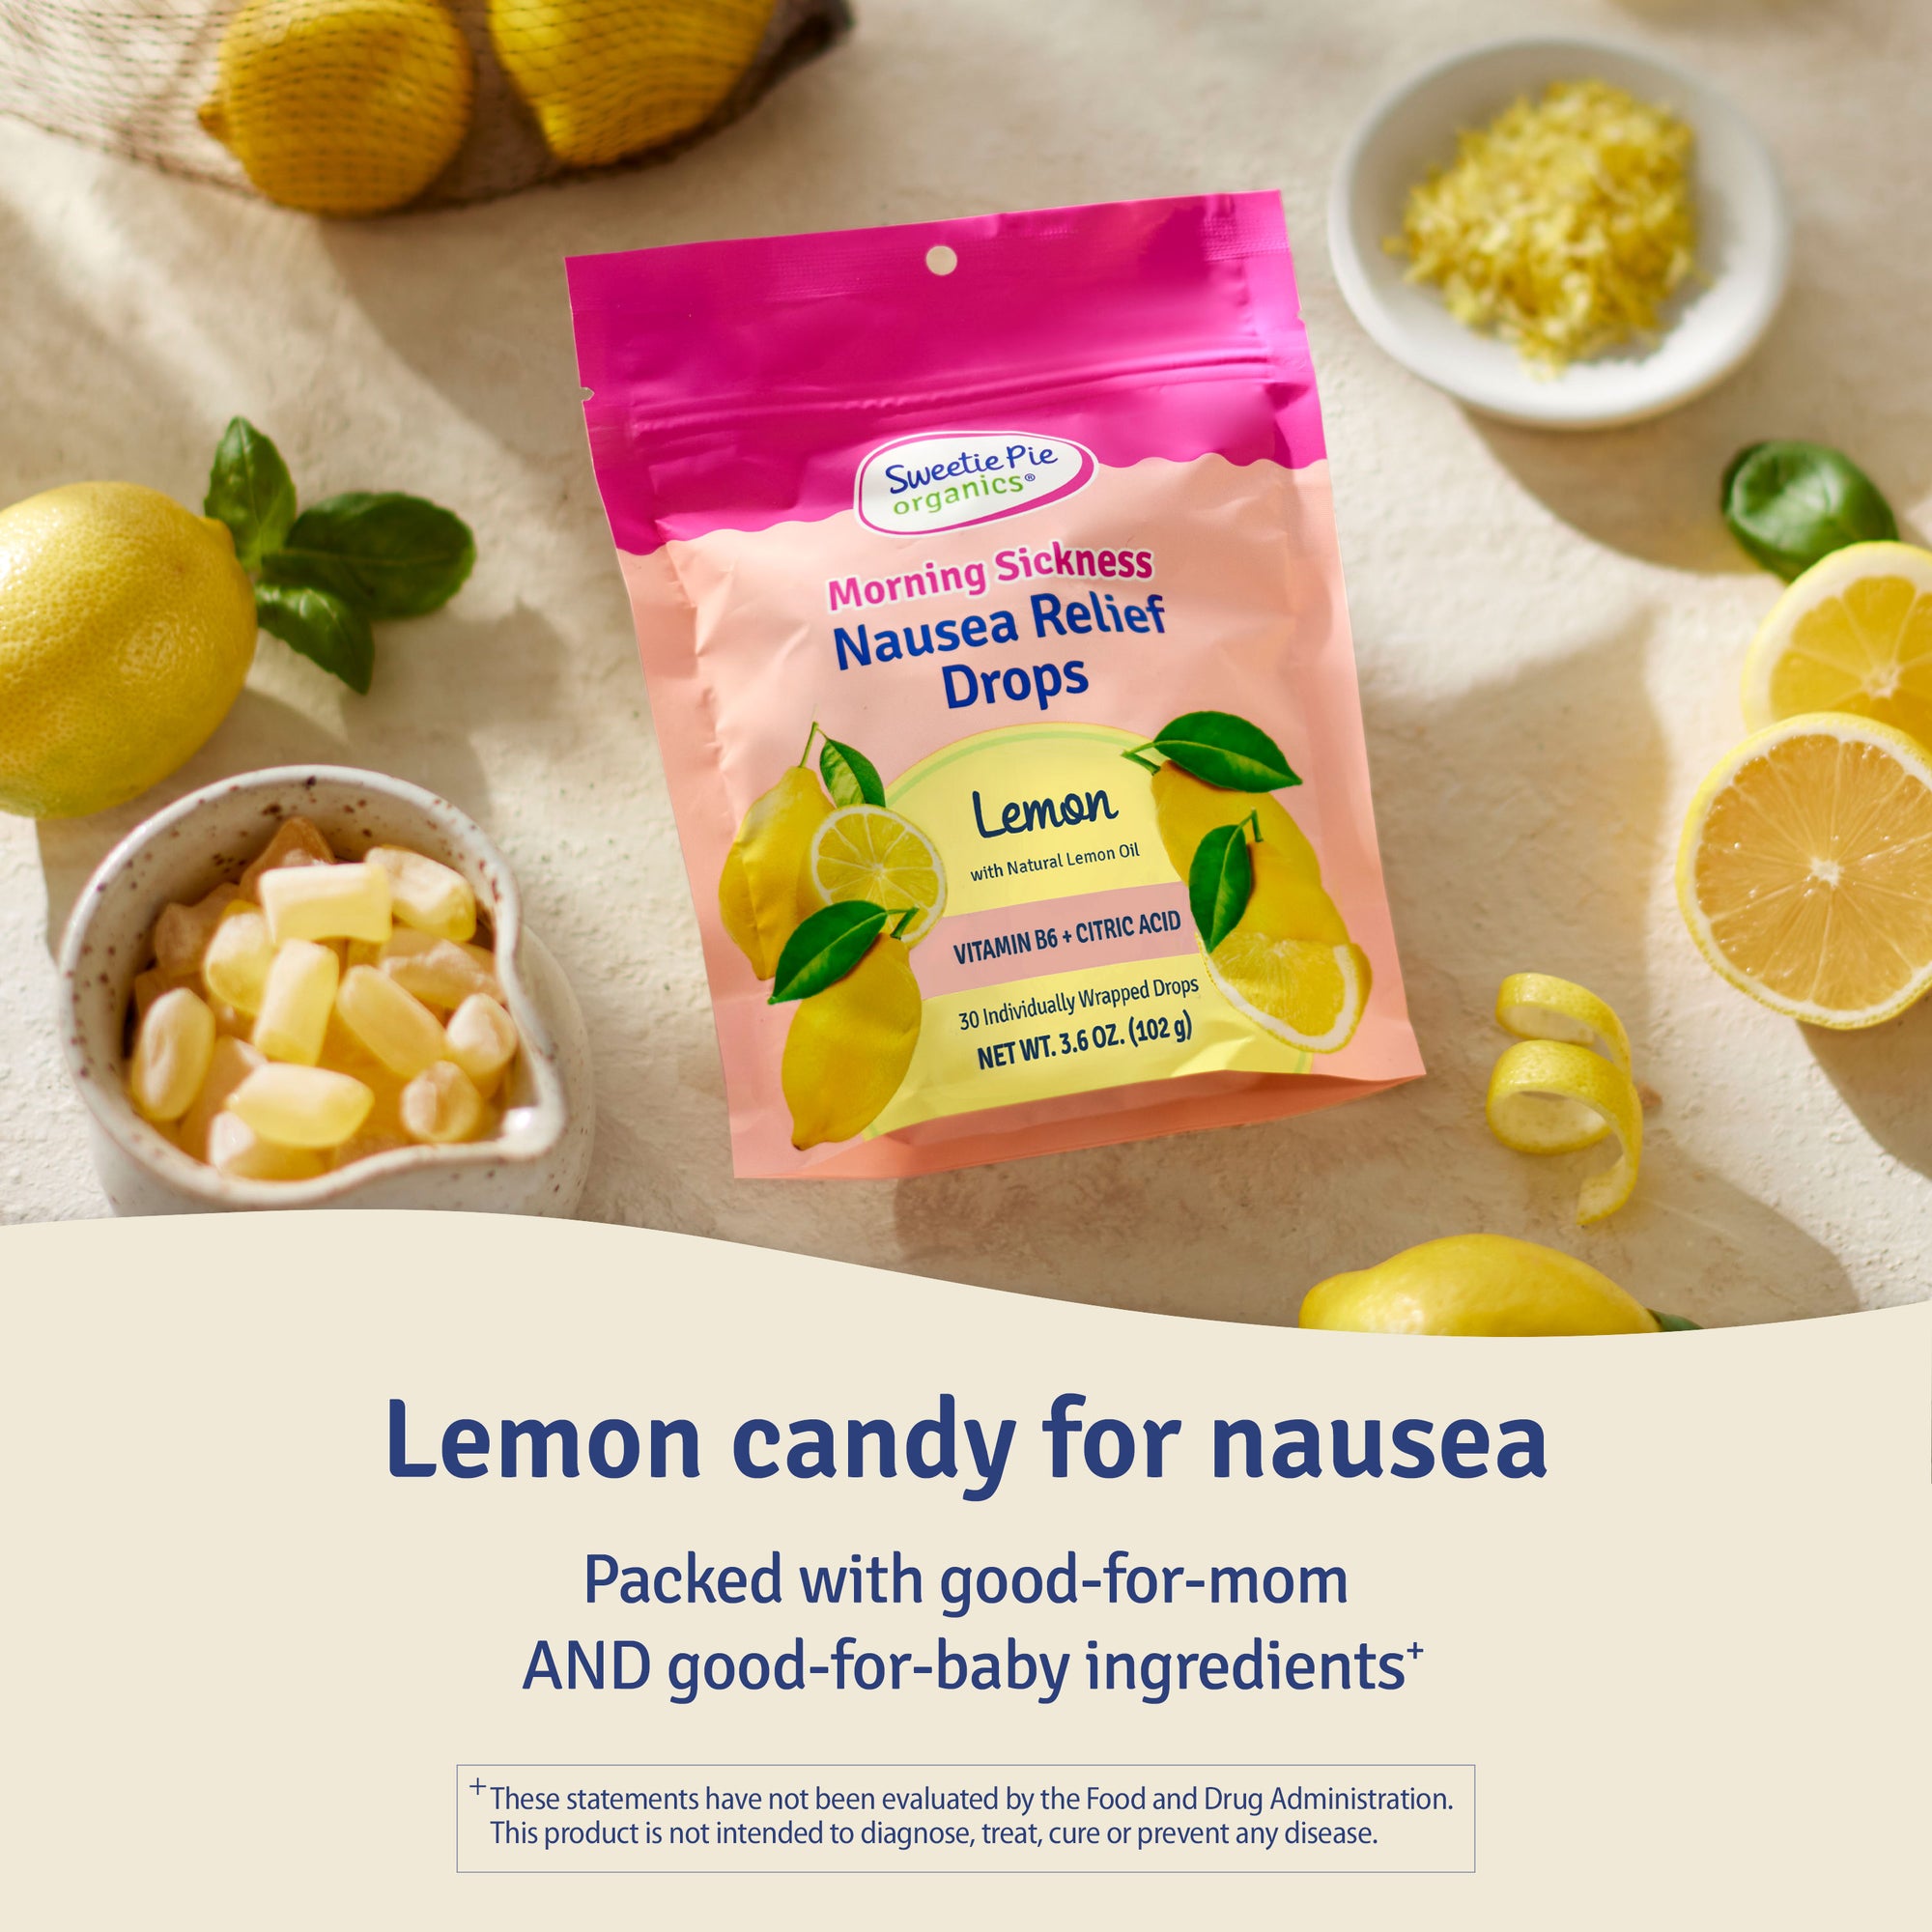 Lemon candy for nausea bag of Sweetie Pie Morning Sickness Nausea Relief Drops